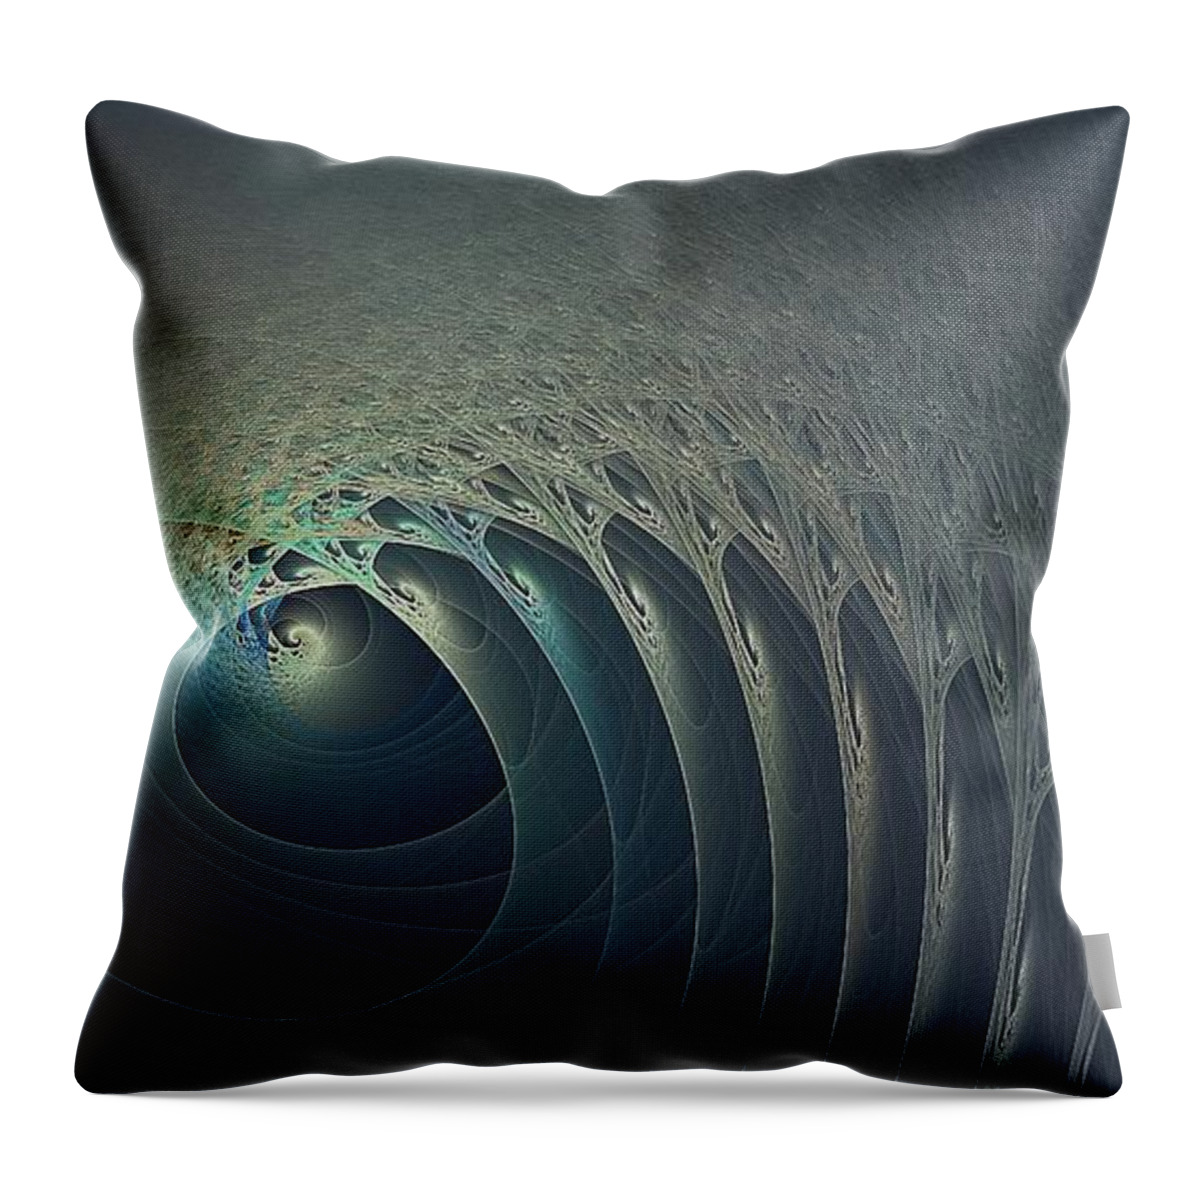  Throw Pillow featuring the digital art Tocopilla Moonlight 16x9 by Doug Morgan